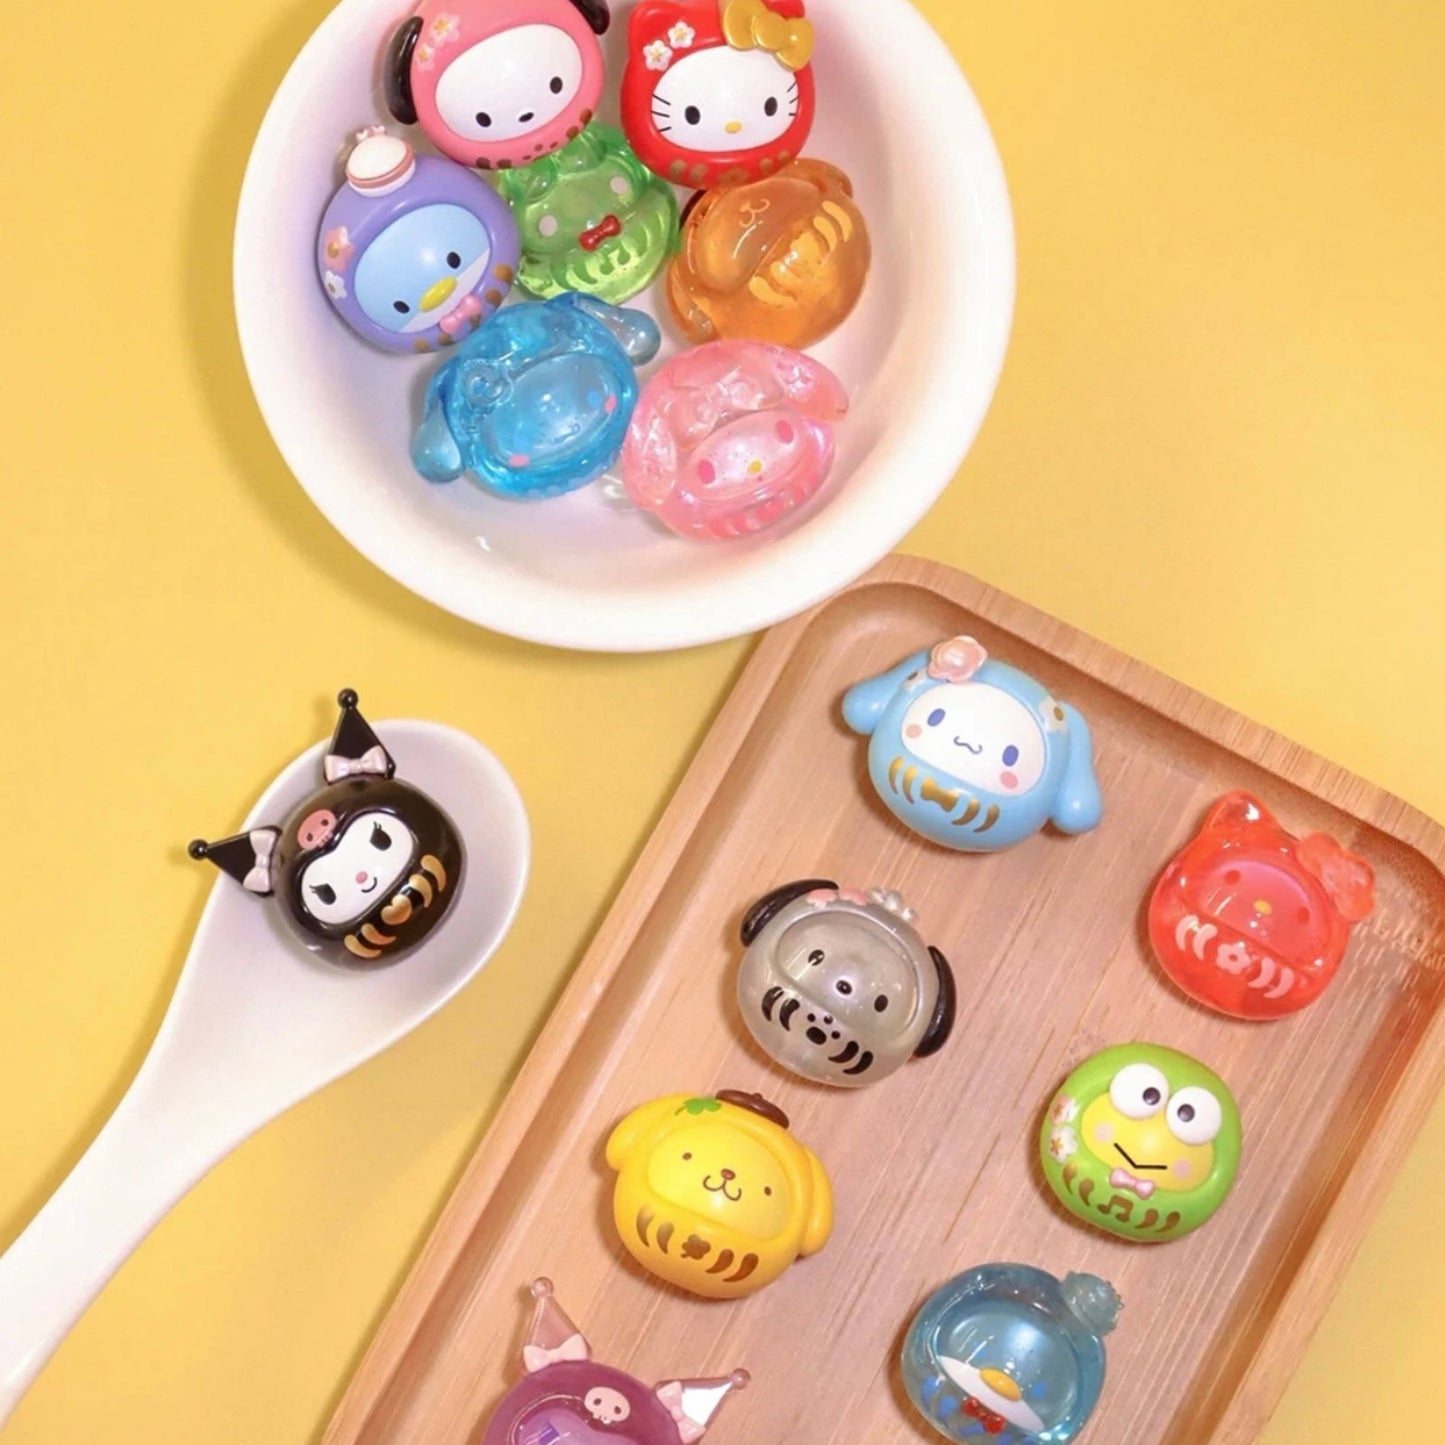 【Restock】Top Toy Sanrio Characters Mini Daruma Beans Blind Bag Random Style (5 in 1)